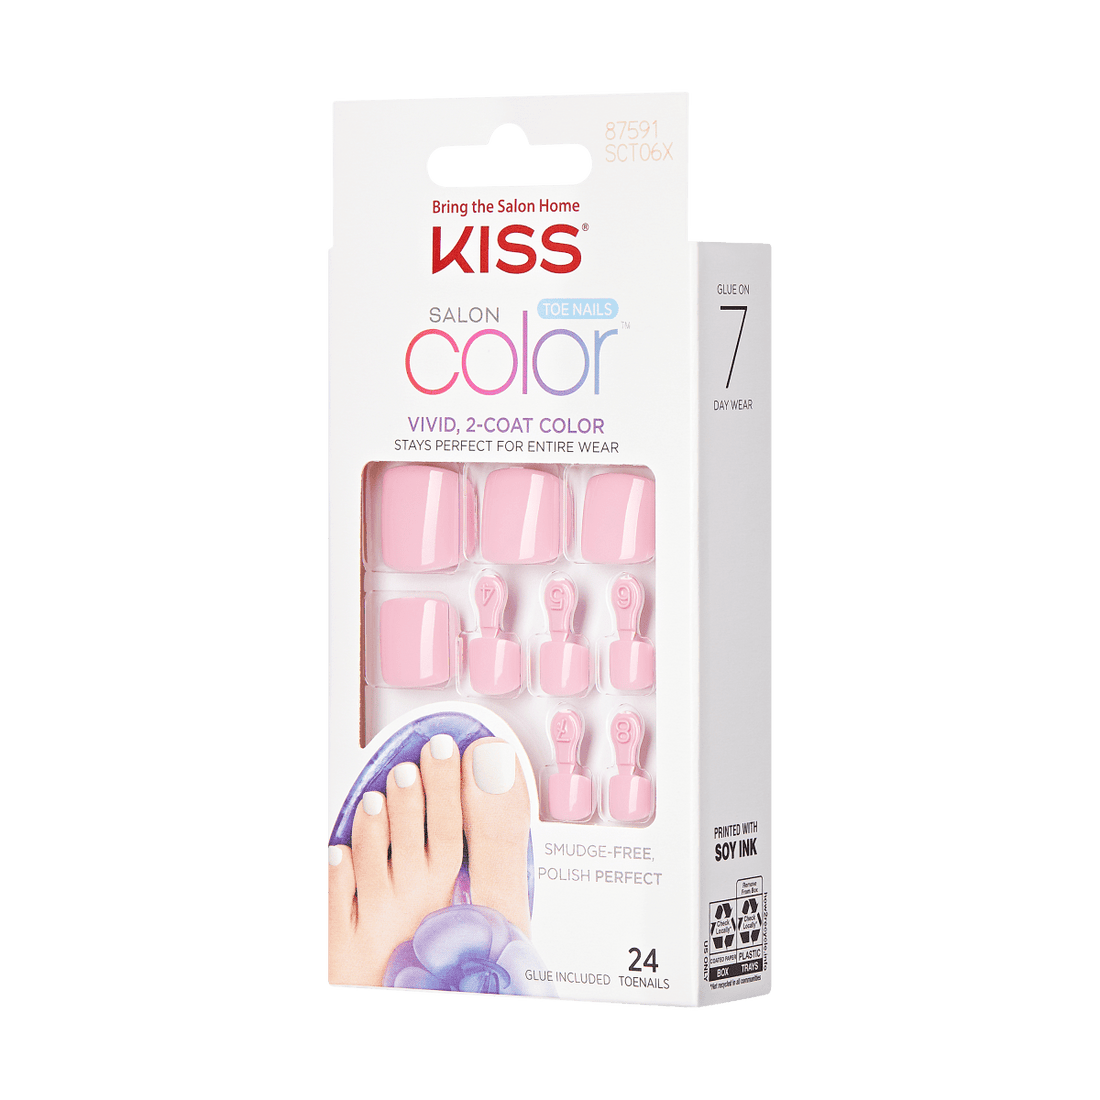 KISS Salon Color, Press-On Nails, Golden Sand, Pink, Short Squoval, 24ct